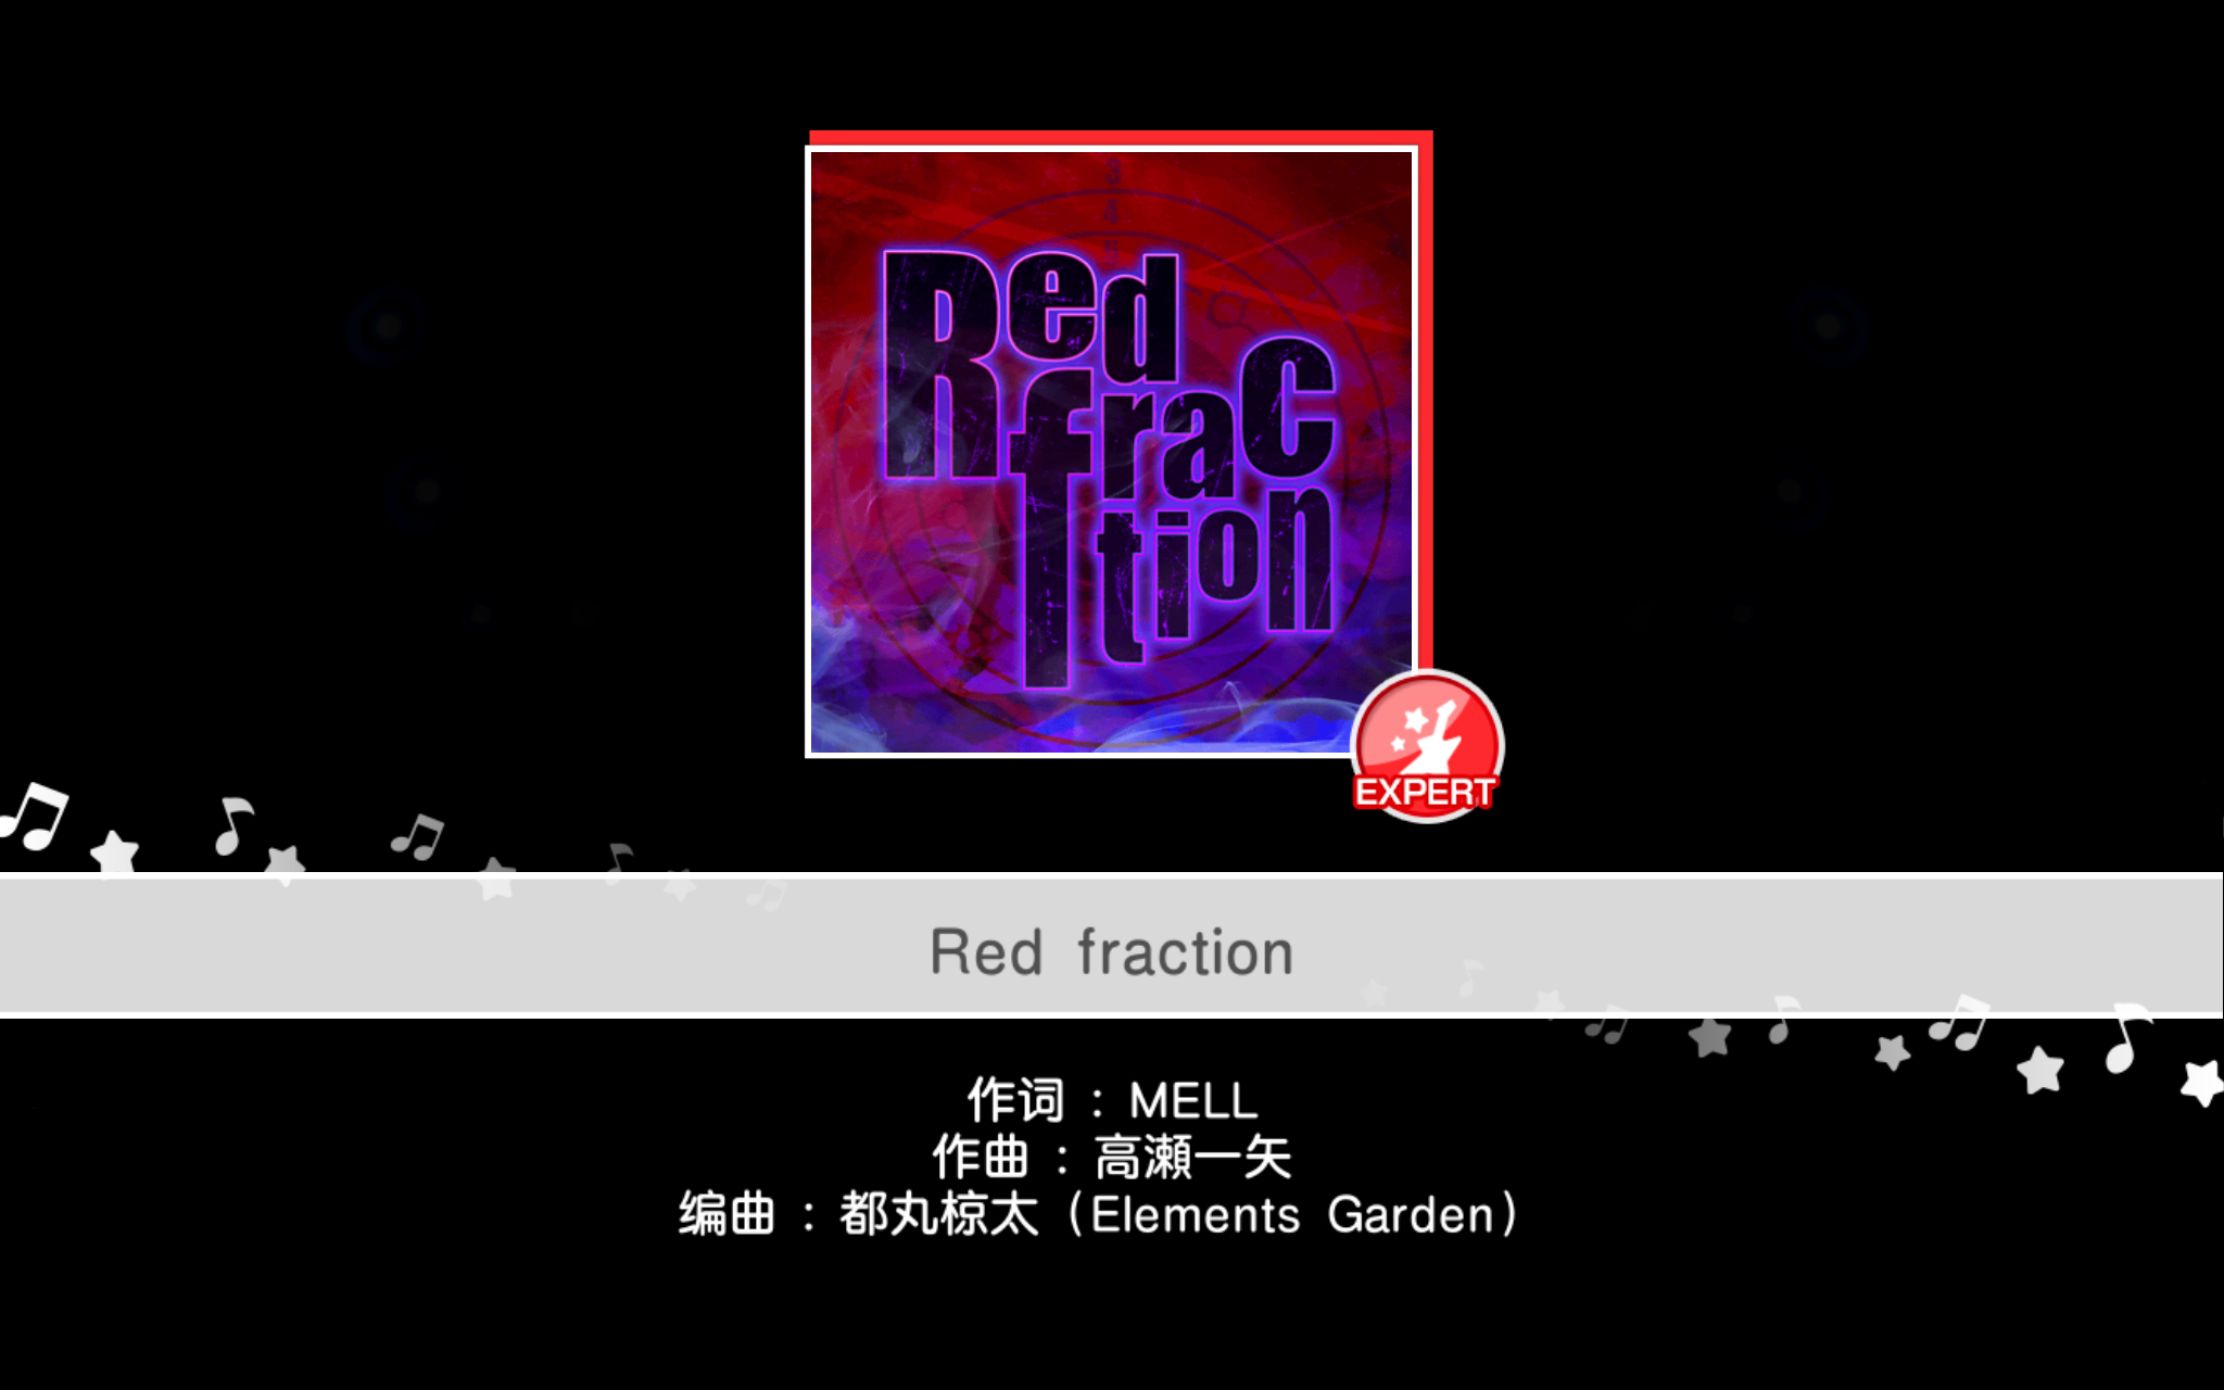 Bang Dream Red Fraction Expert 10 5 无判fc 国服双子活动新曲 哔哩哔哩 つロ干杯 Bilibili